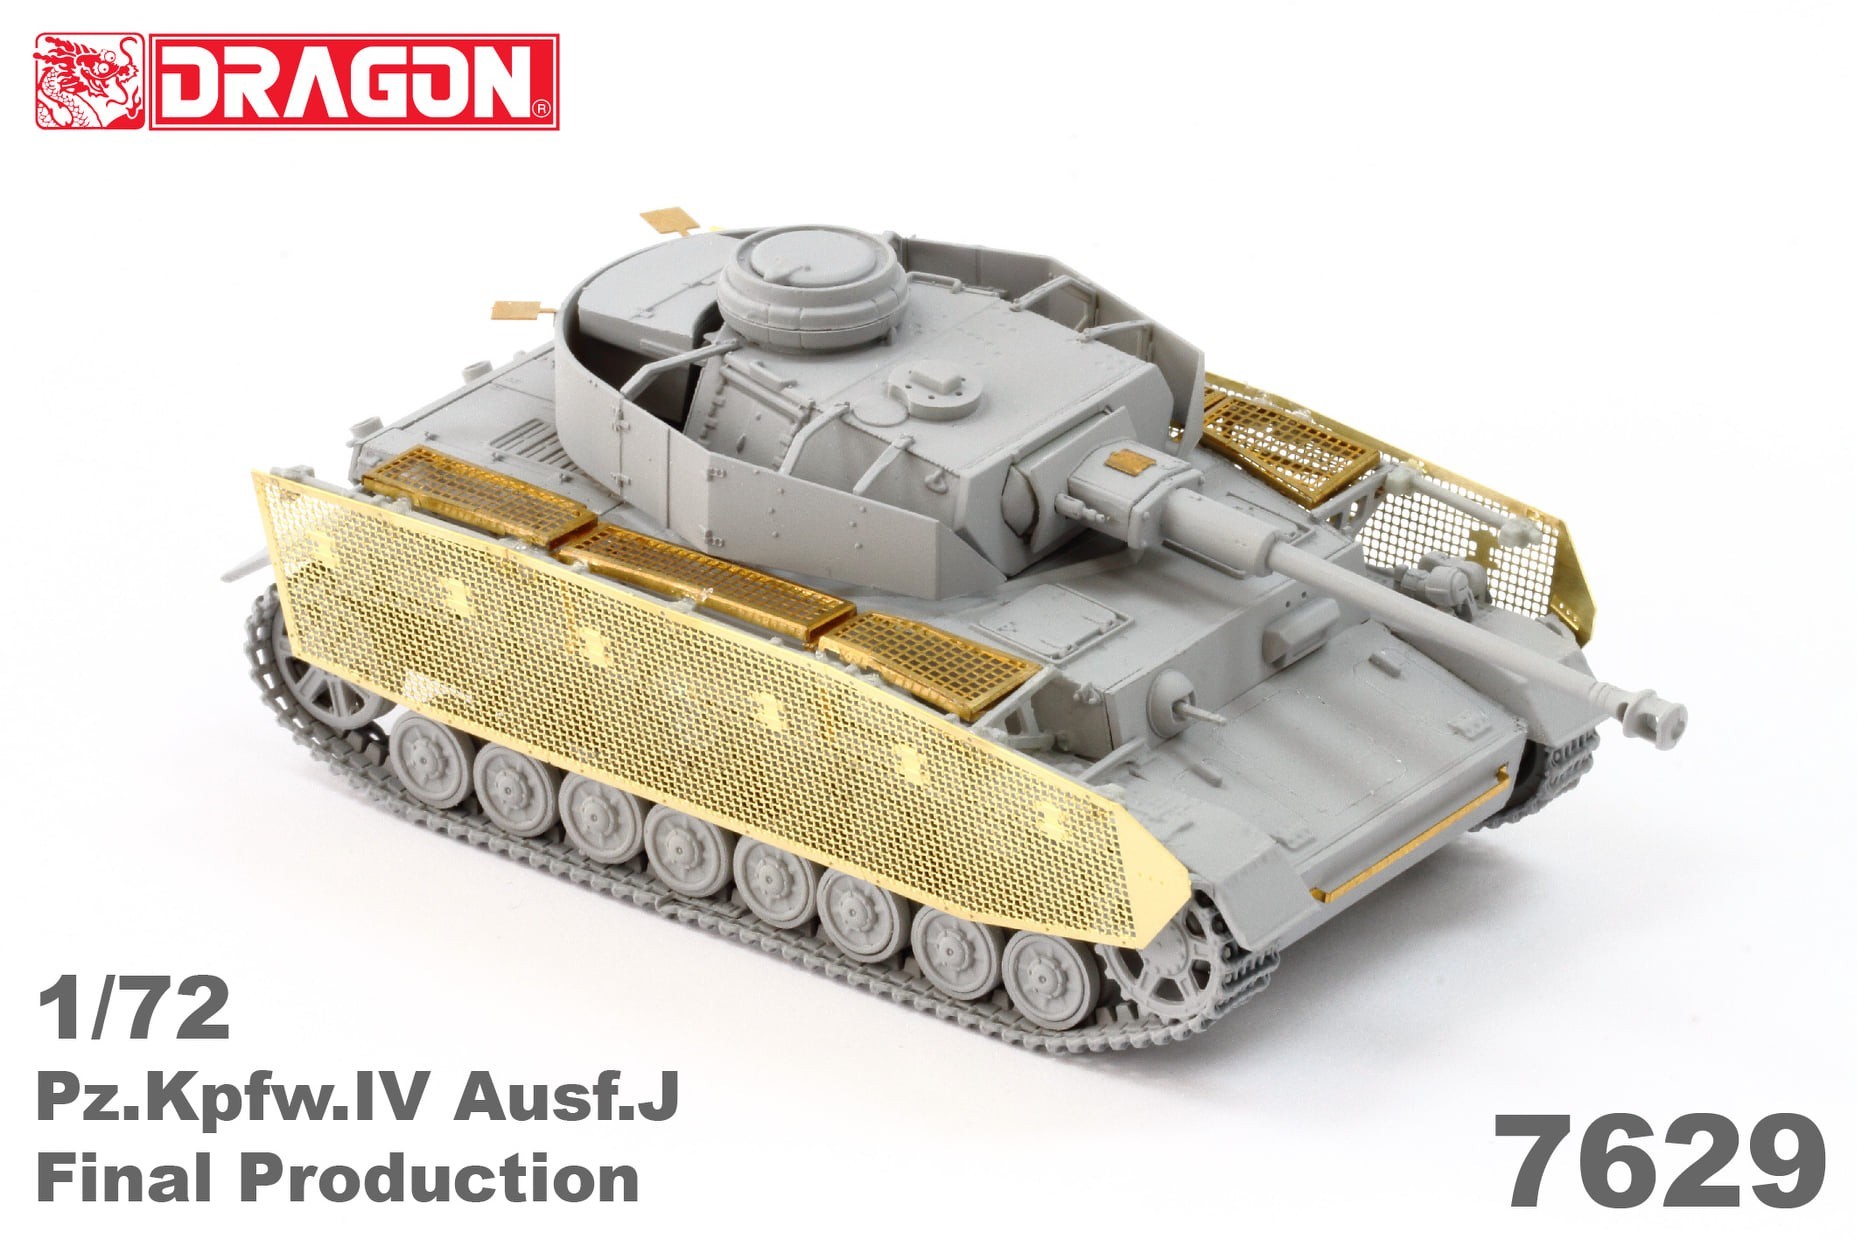 DRAGON WWII GERMAN Pz.Kpfw.IV Ausf.F1 1/72 tank model finished non diecast F 